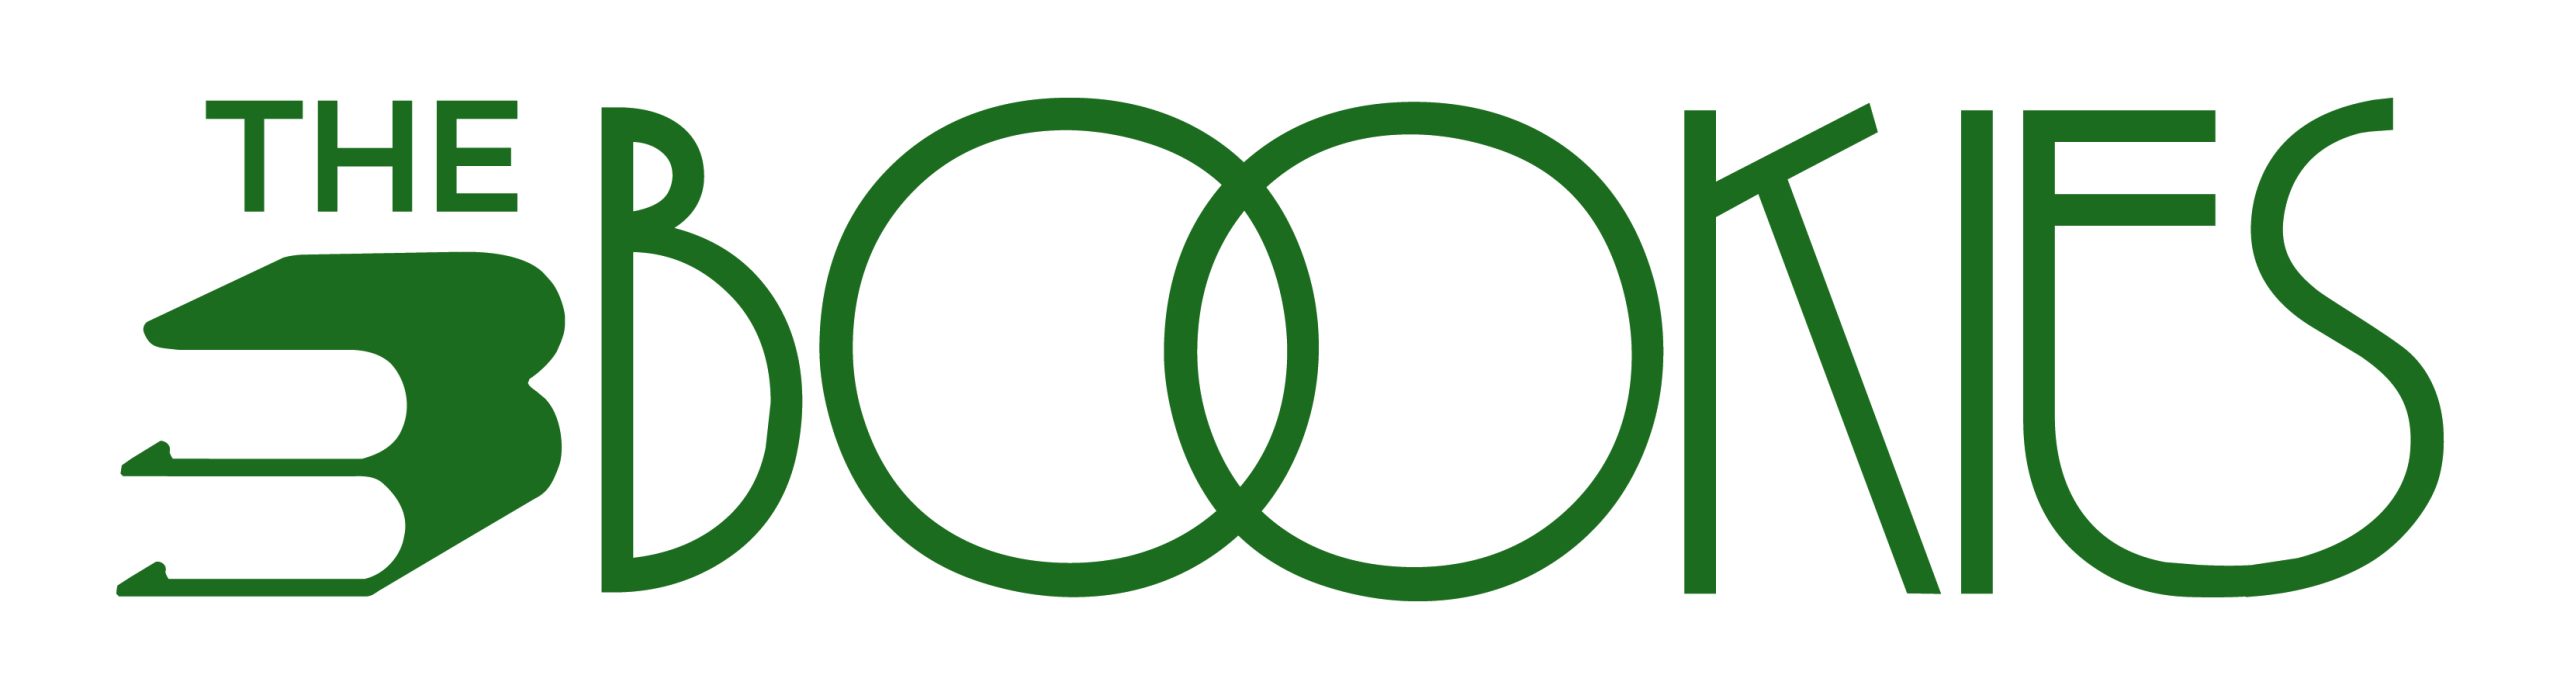 The Bookies logo